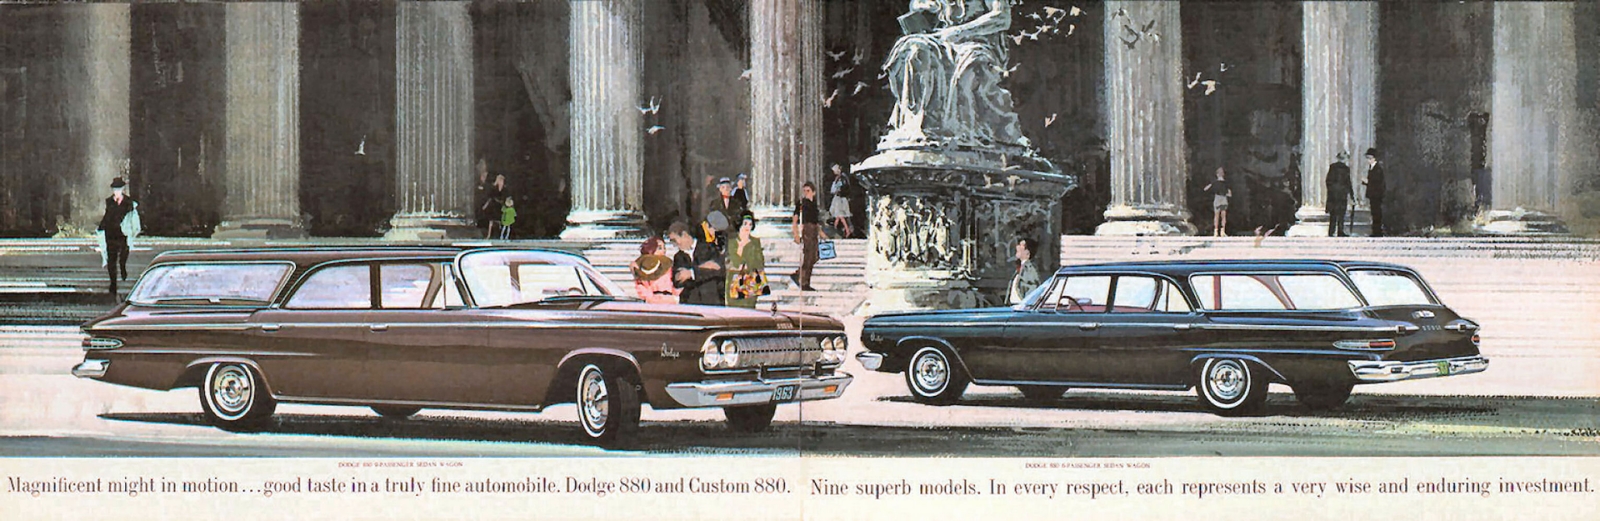 n_1963 Dodge 880 (Sm)-12-13.jpg